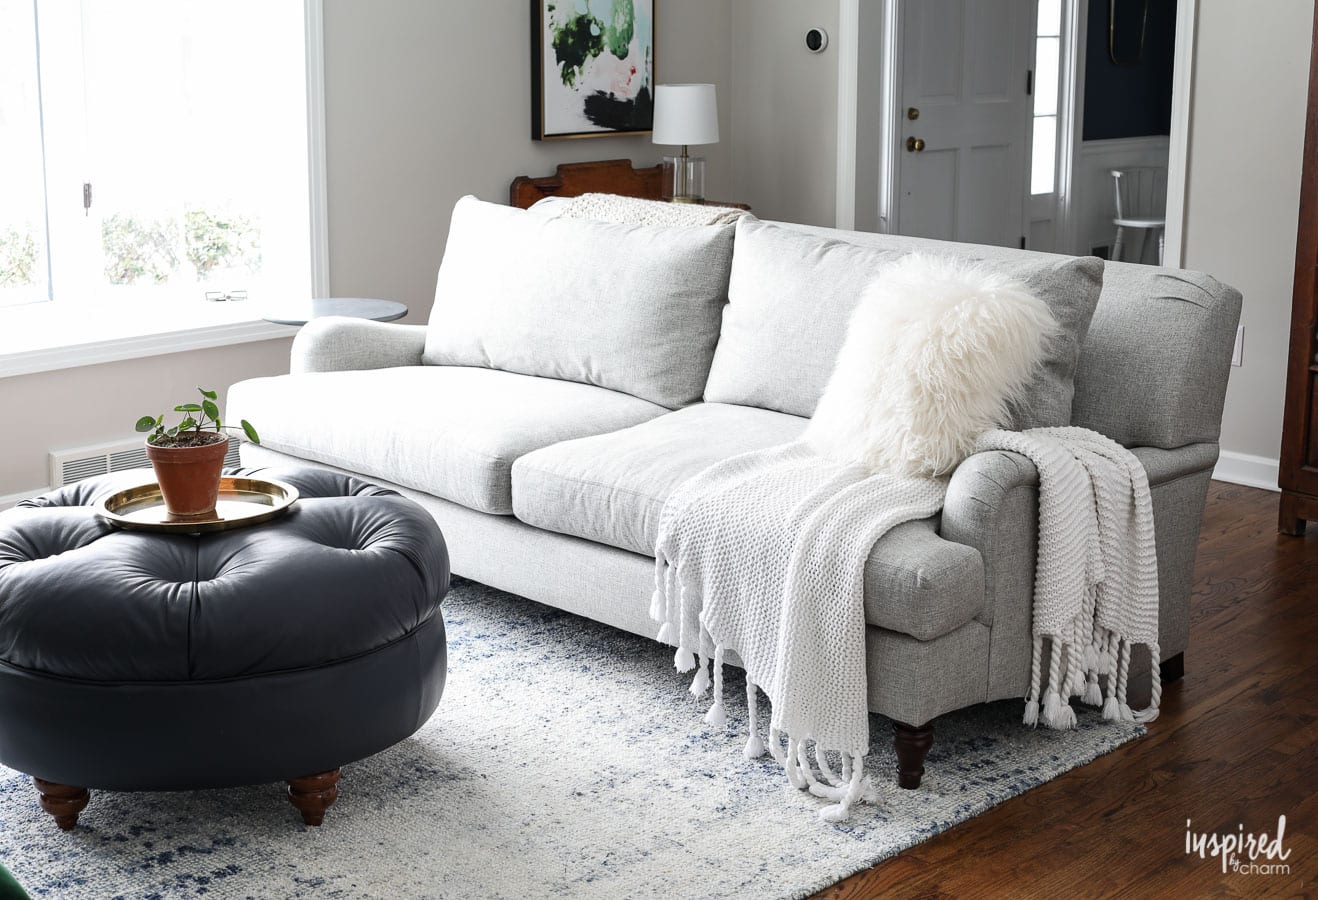 My New Living Room Sofa - Carlisle Upholstered Sofa #livingroom #sofa